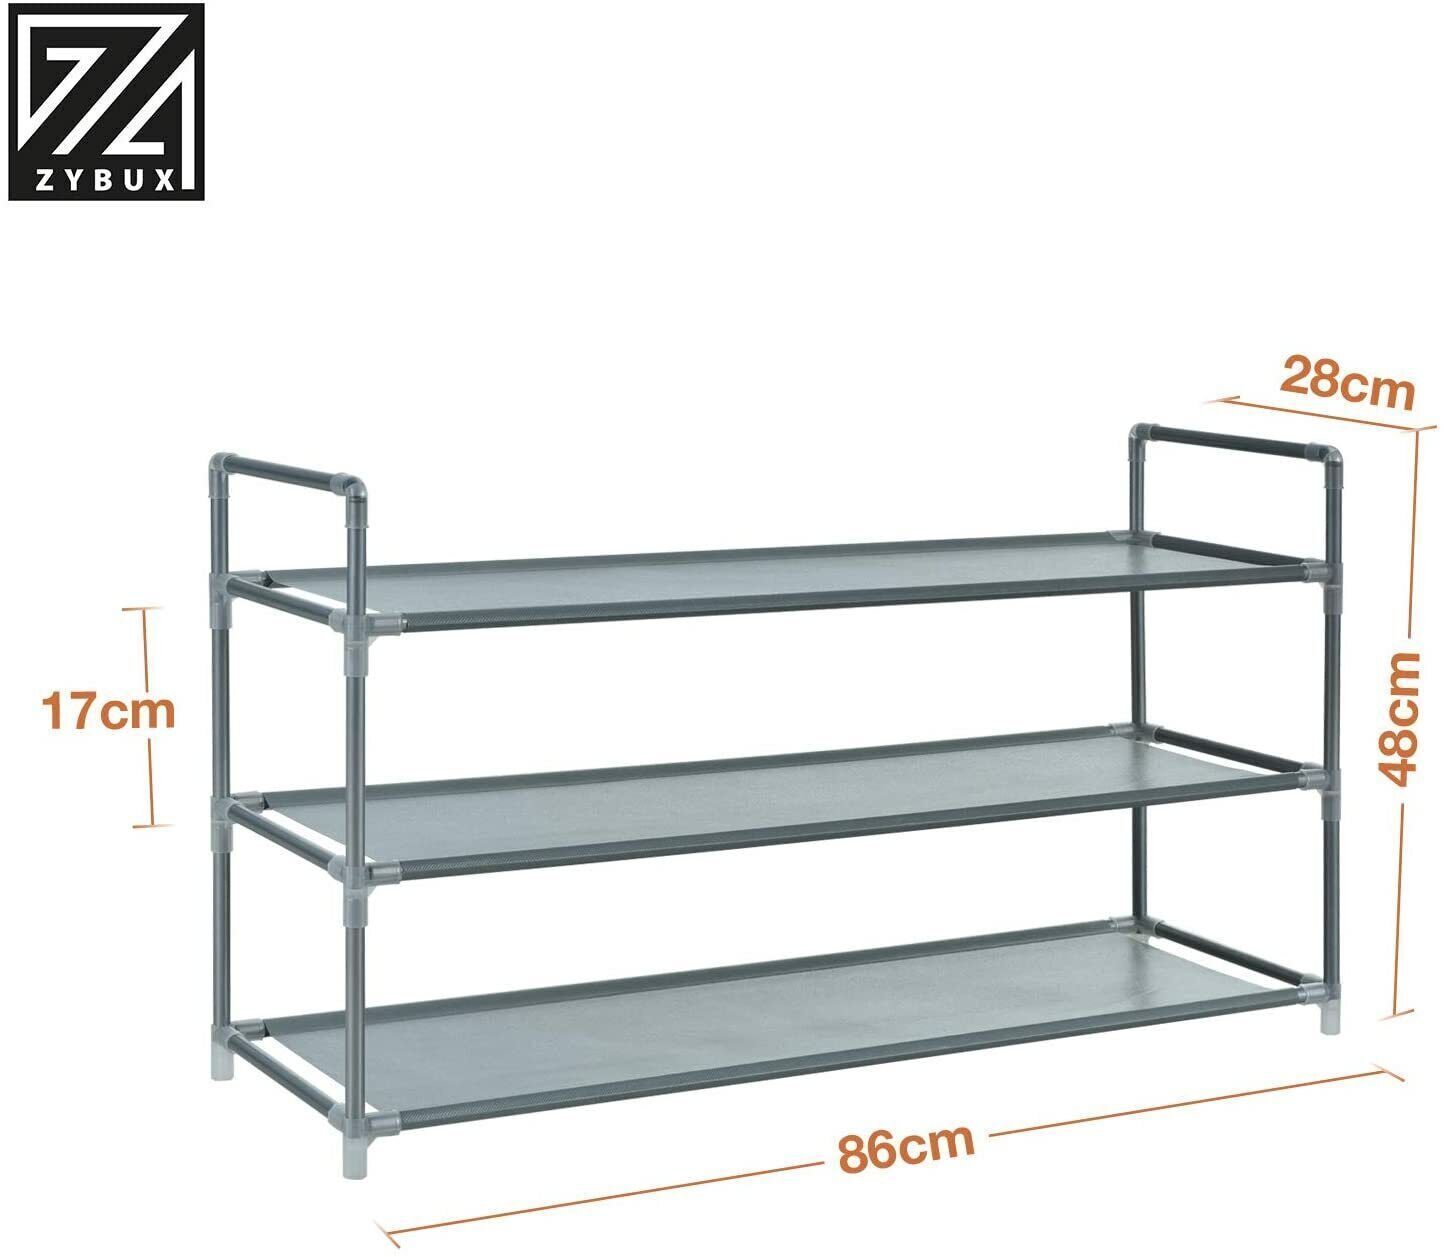 Long 3 Tier Fabric Organiser Shoe Shelf Rack Space Saving Stand Storage Compact - ZYBUX